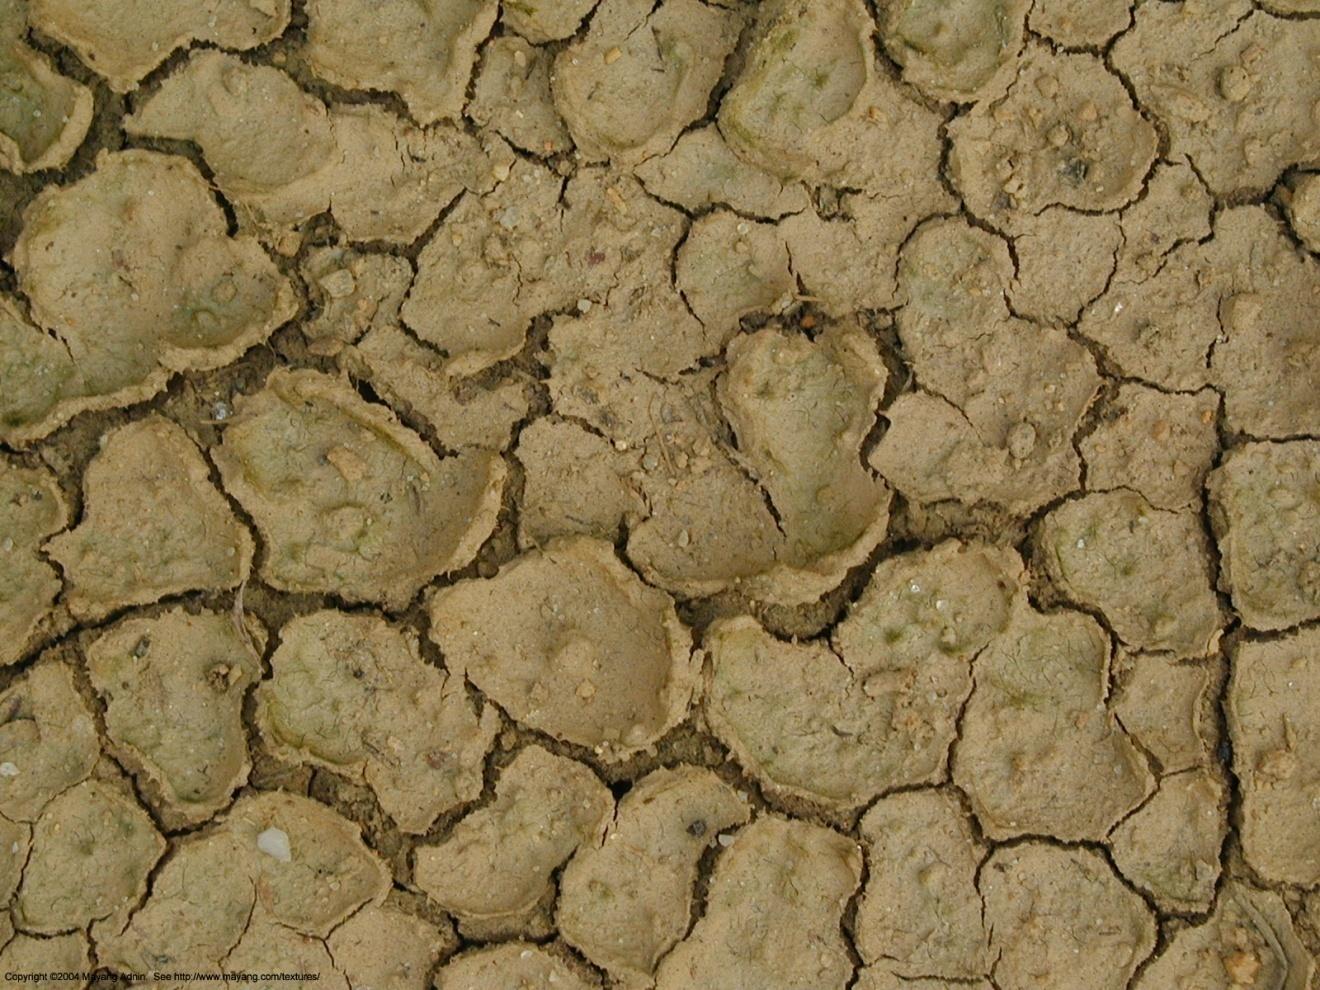 Mud Cracks